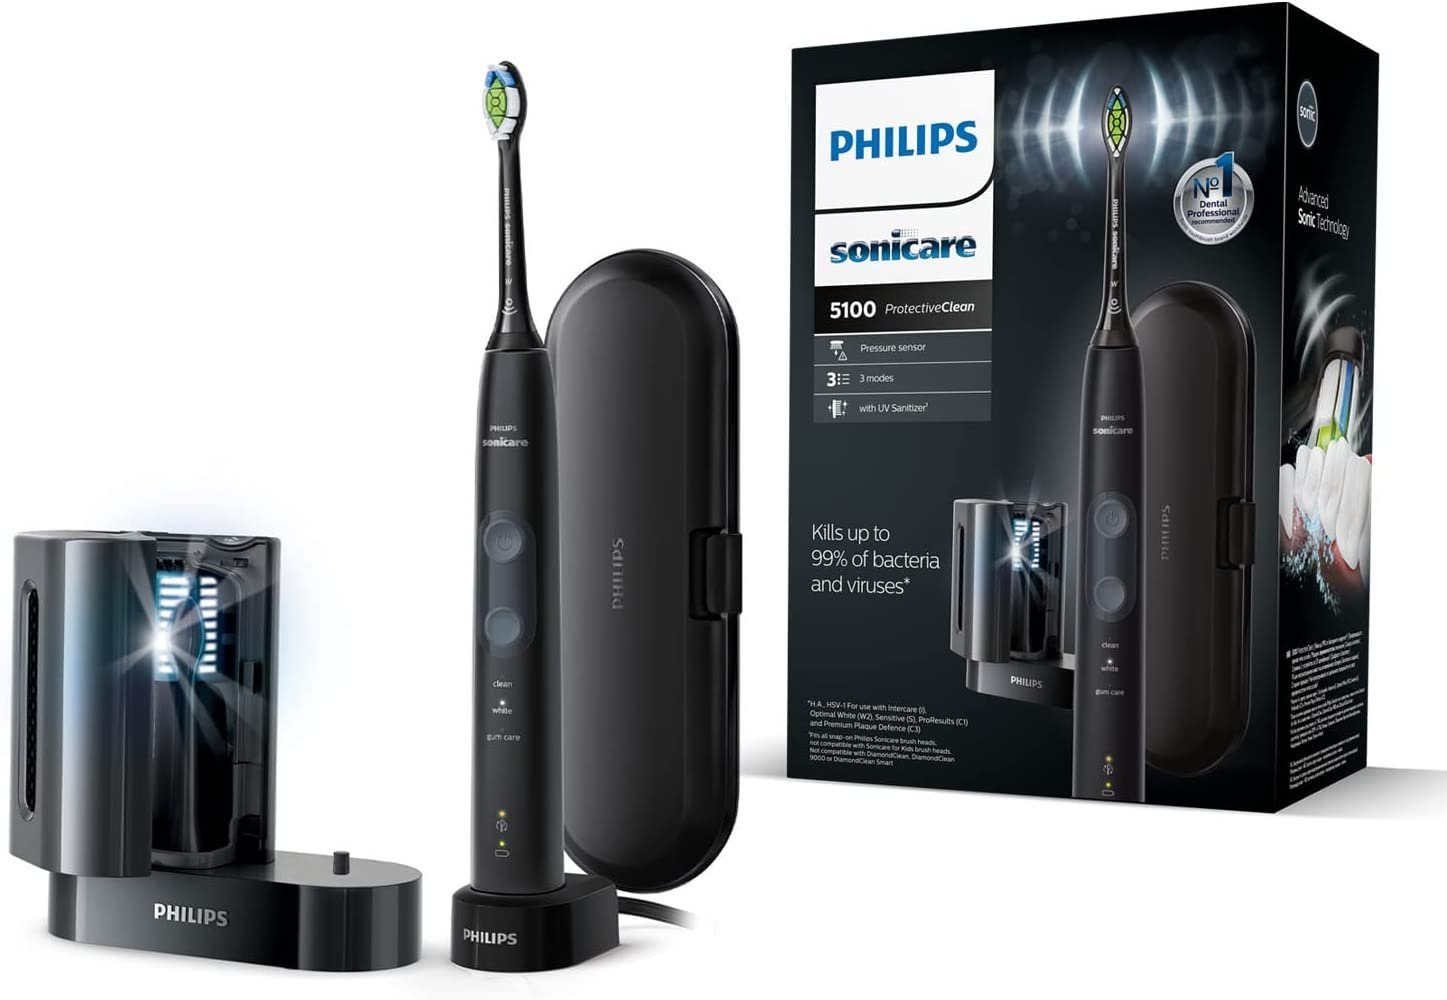 Philips Sonicare Elektrische Zahnbürste HX6850/57 Pro­tec­tive­Clean 5100, Schall­zahn­bürs­te